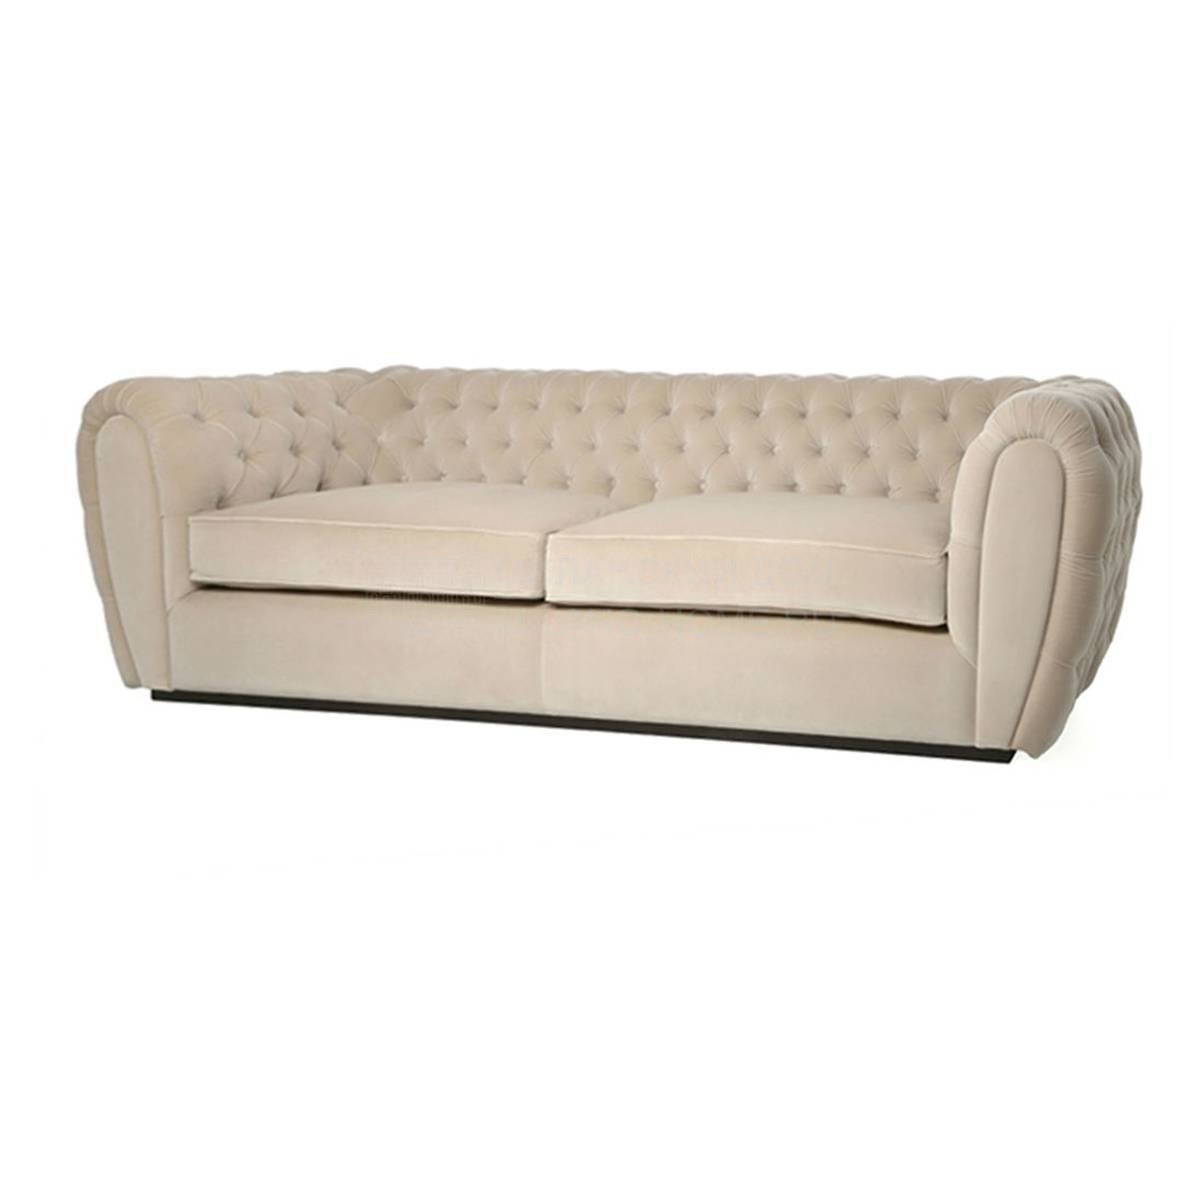 Прямой диван Windsor из Великобритании фабрики THE SOFA & CHAIR Company